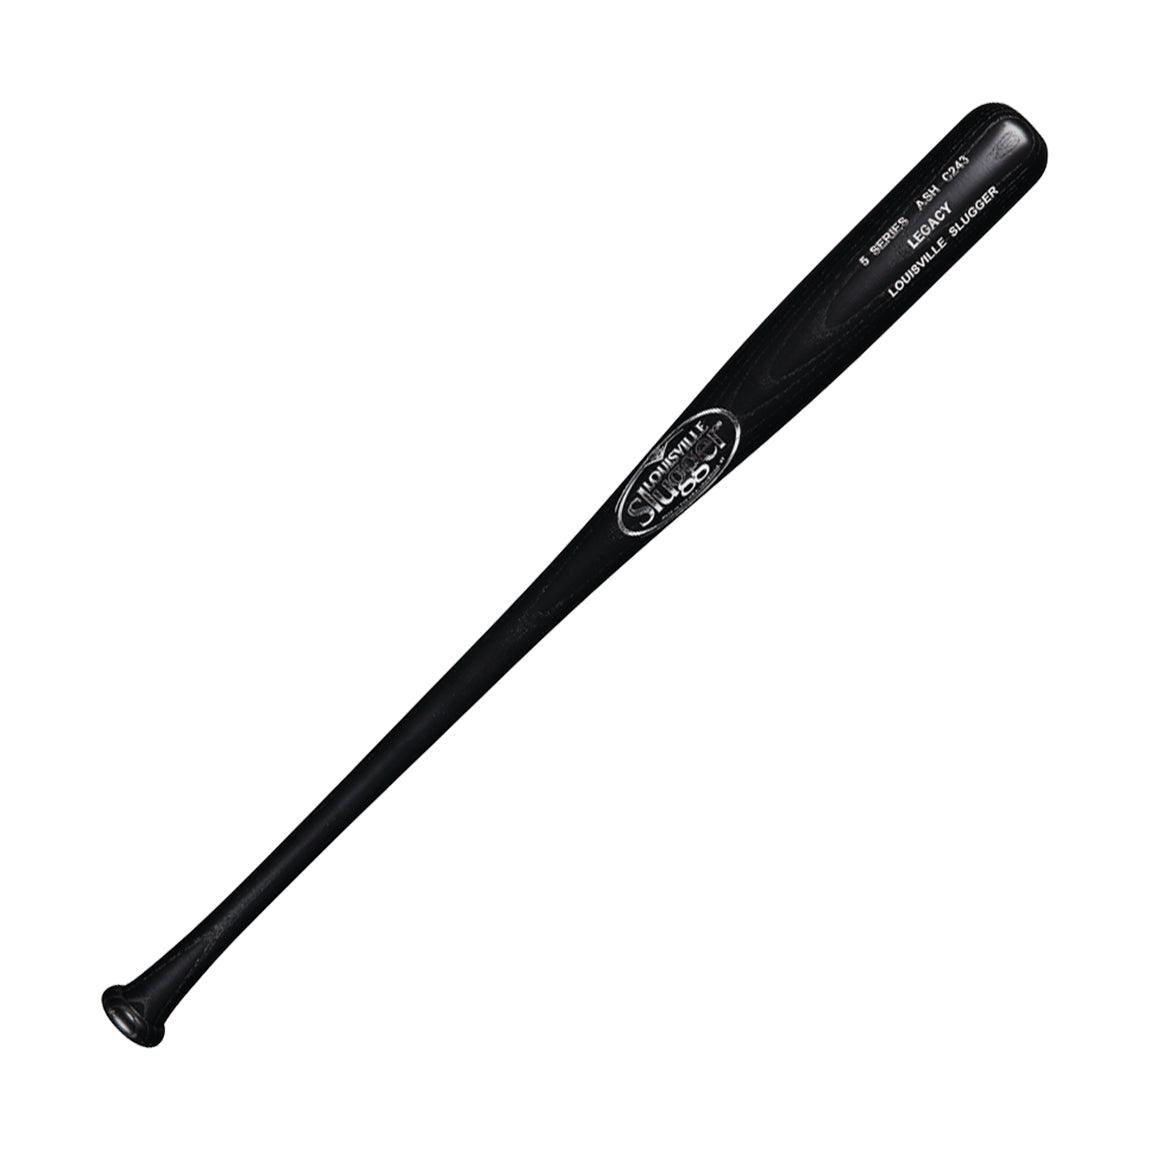 Series 5 Legacy Ash C243 Baseball Bat - Sports Excellence